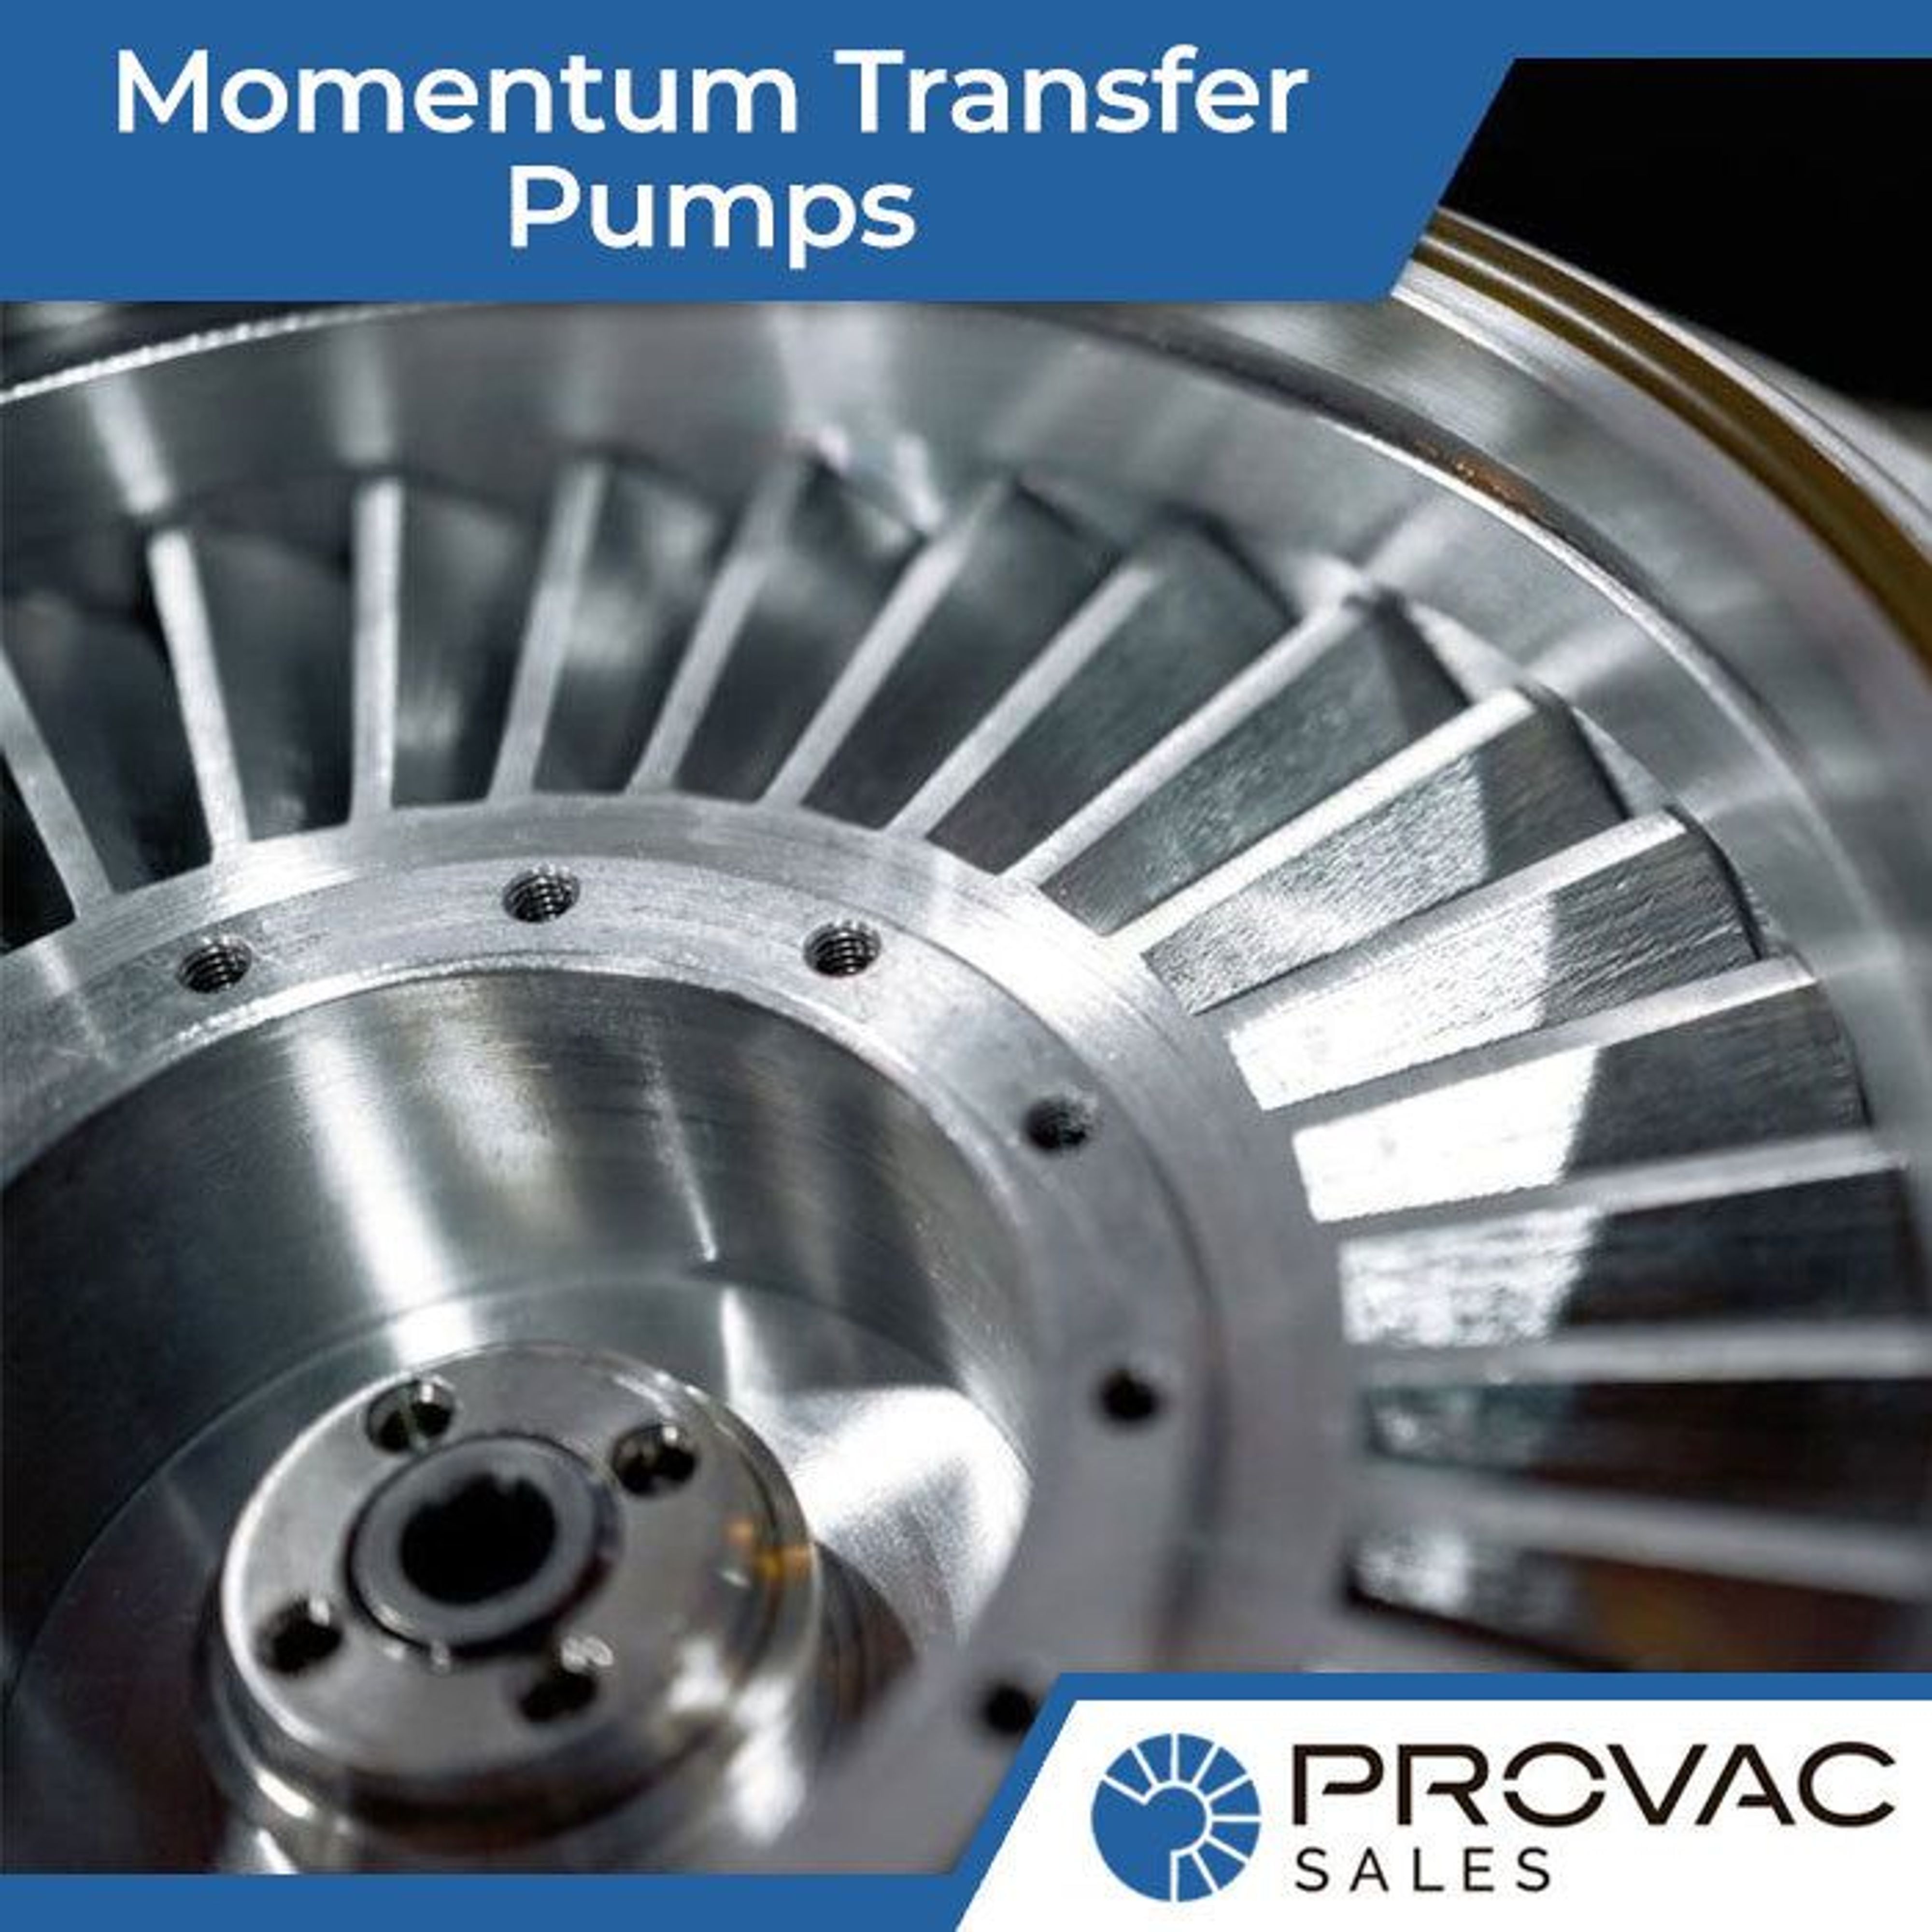 Momentum Transfer Pumps Background